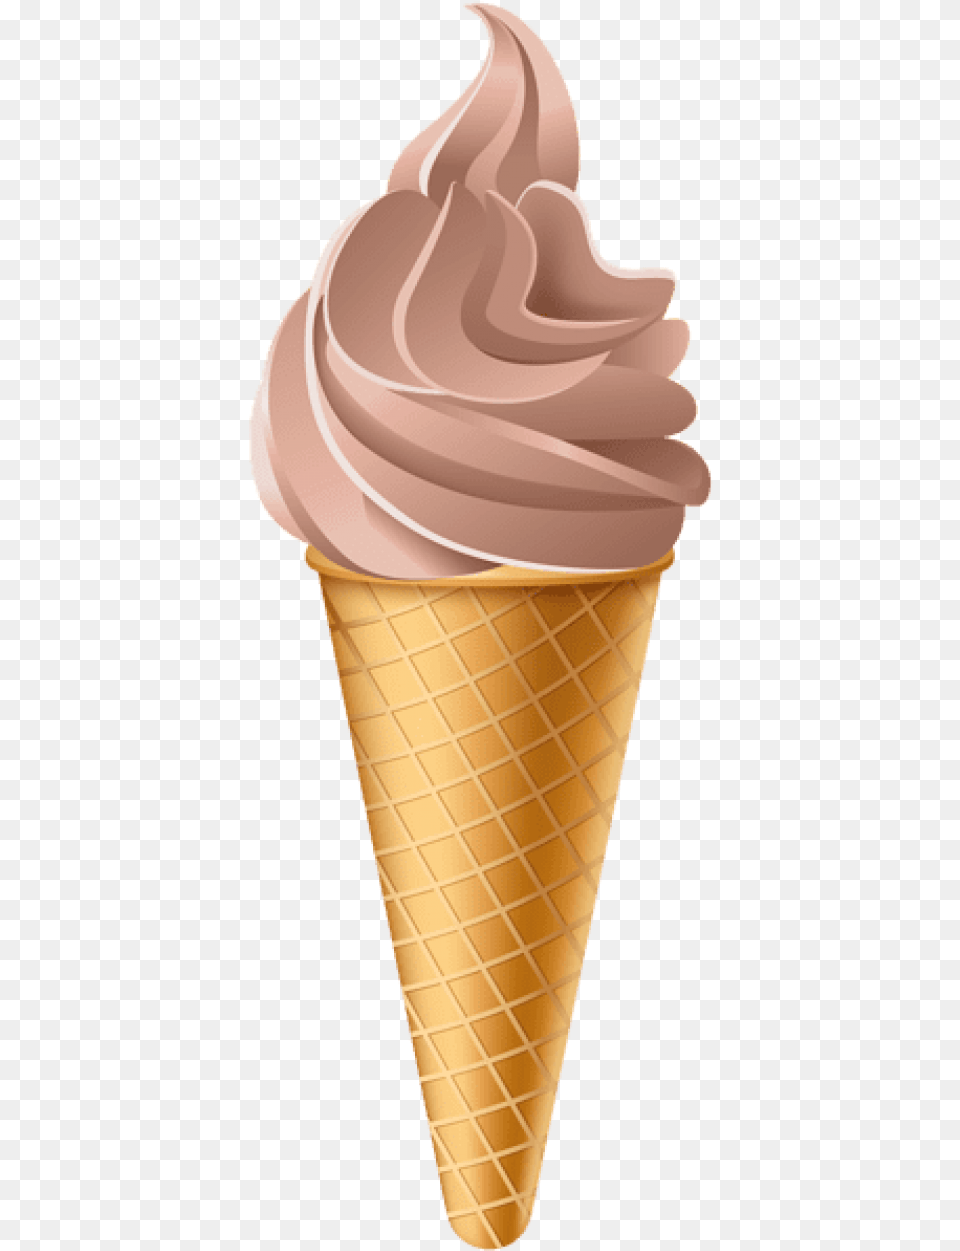 Ice Cream Images Background Clip Art, Dessert, Food, Ice Cream, Soft Serve Ice Cream Free Png Download